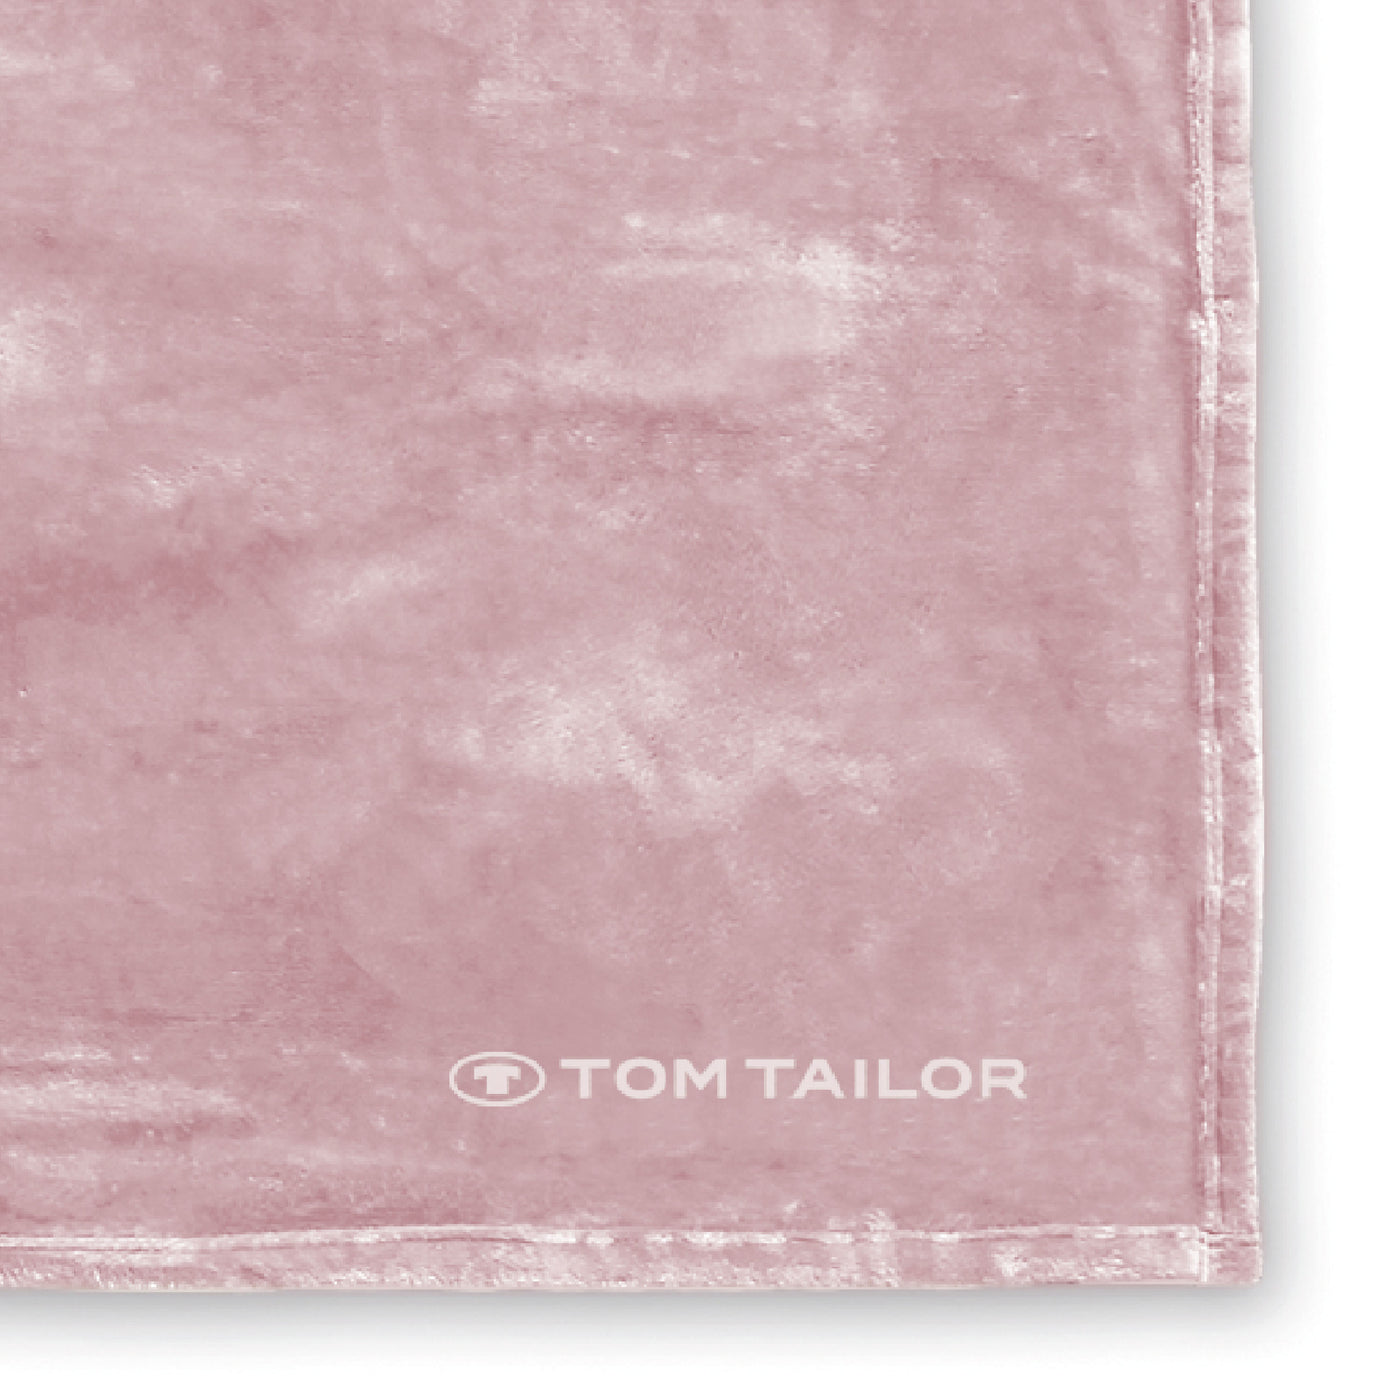 Tom Tailor Blanket